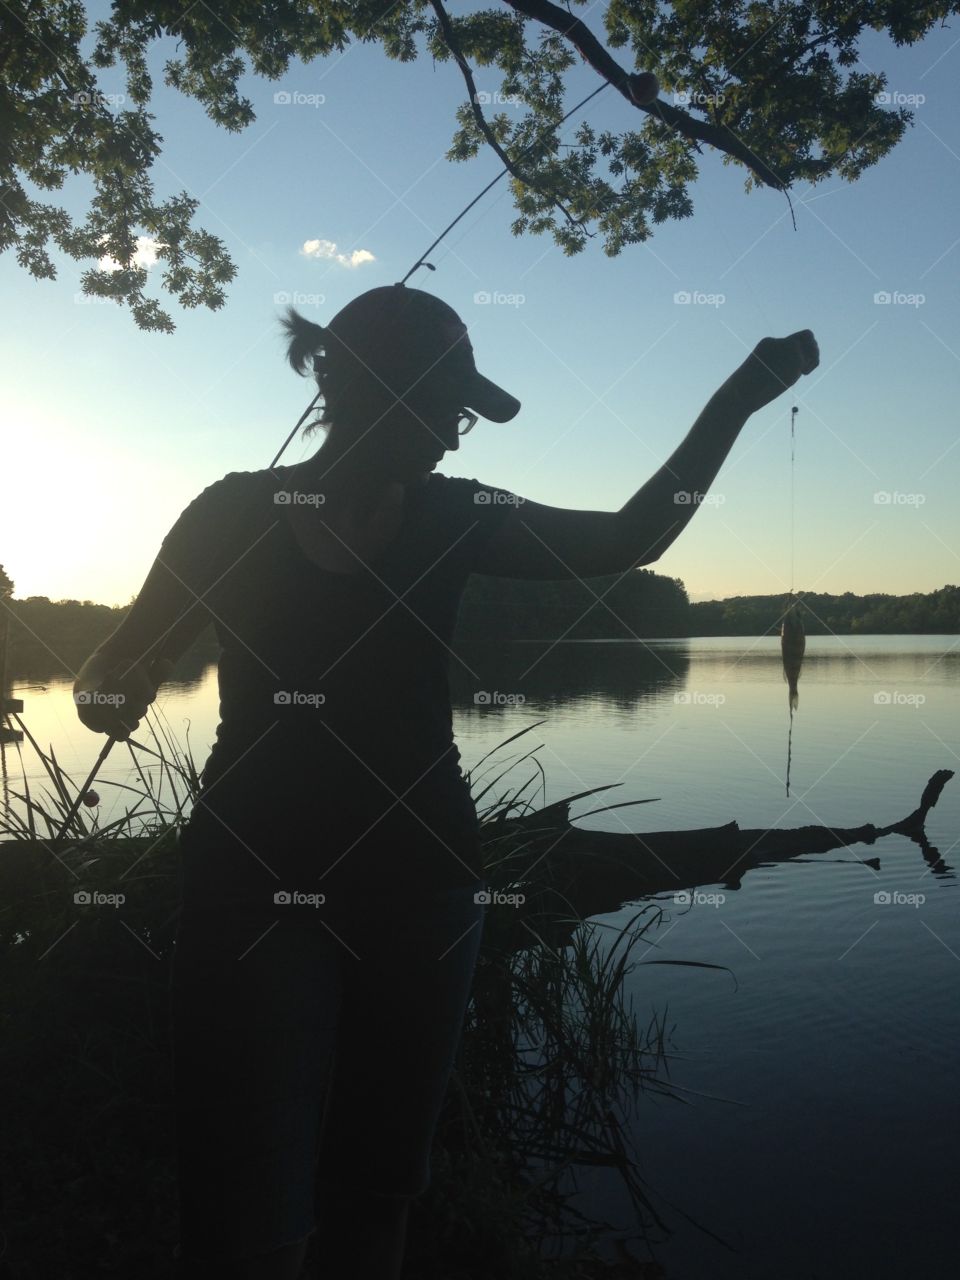 Sunset Fishing 